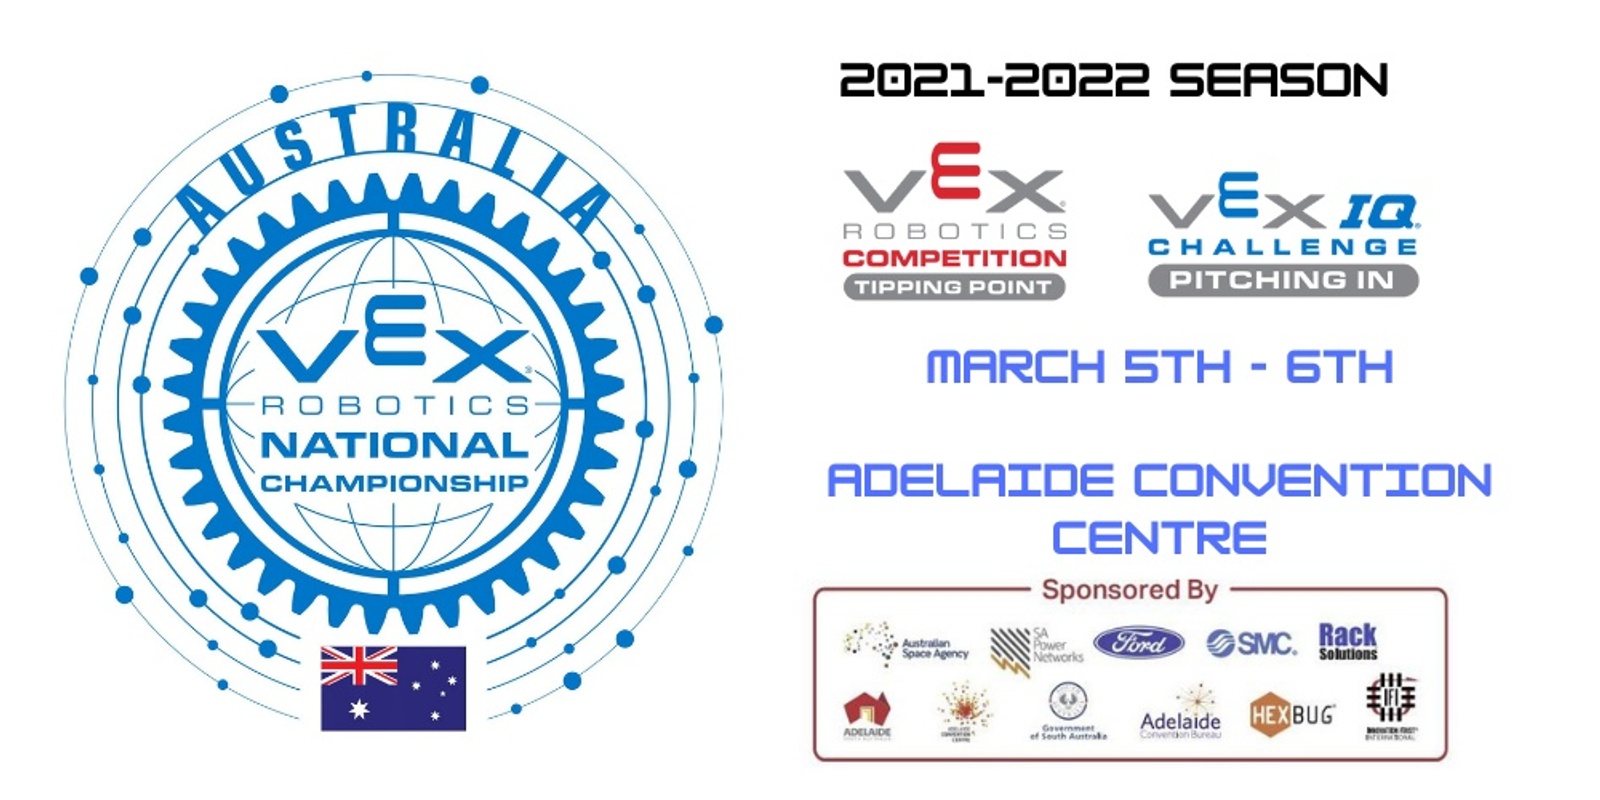 Banner image for 2021-2022 VEX Robotics National Championship